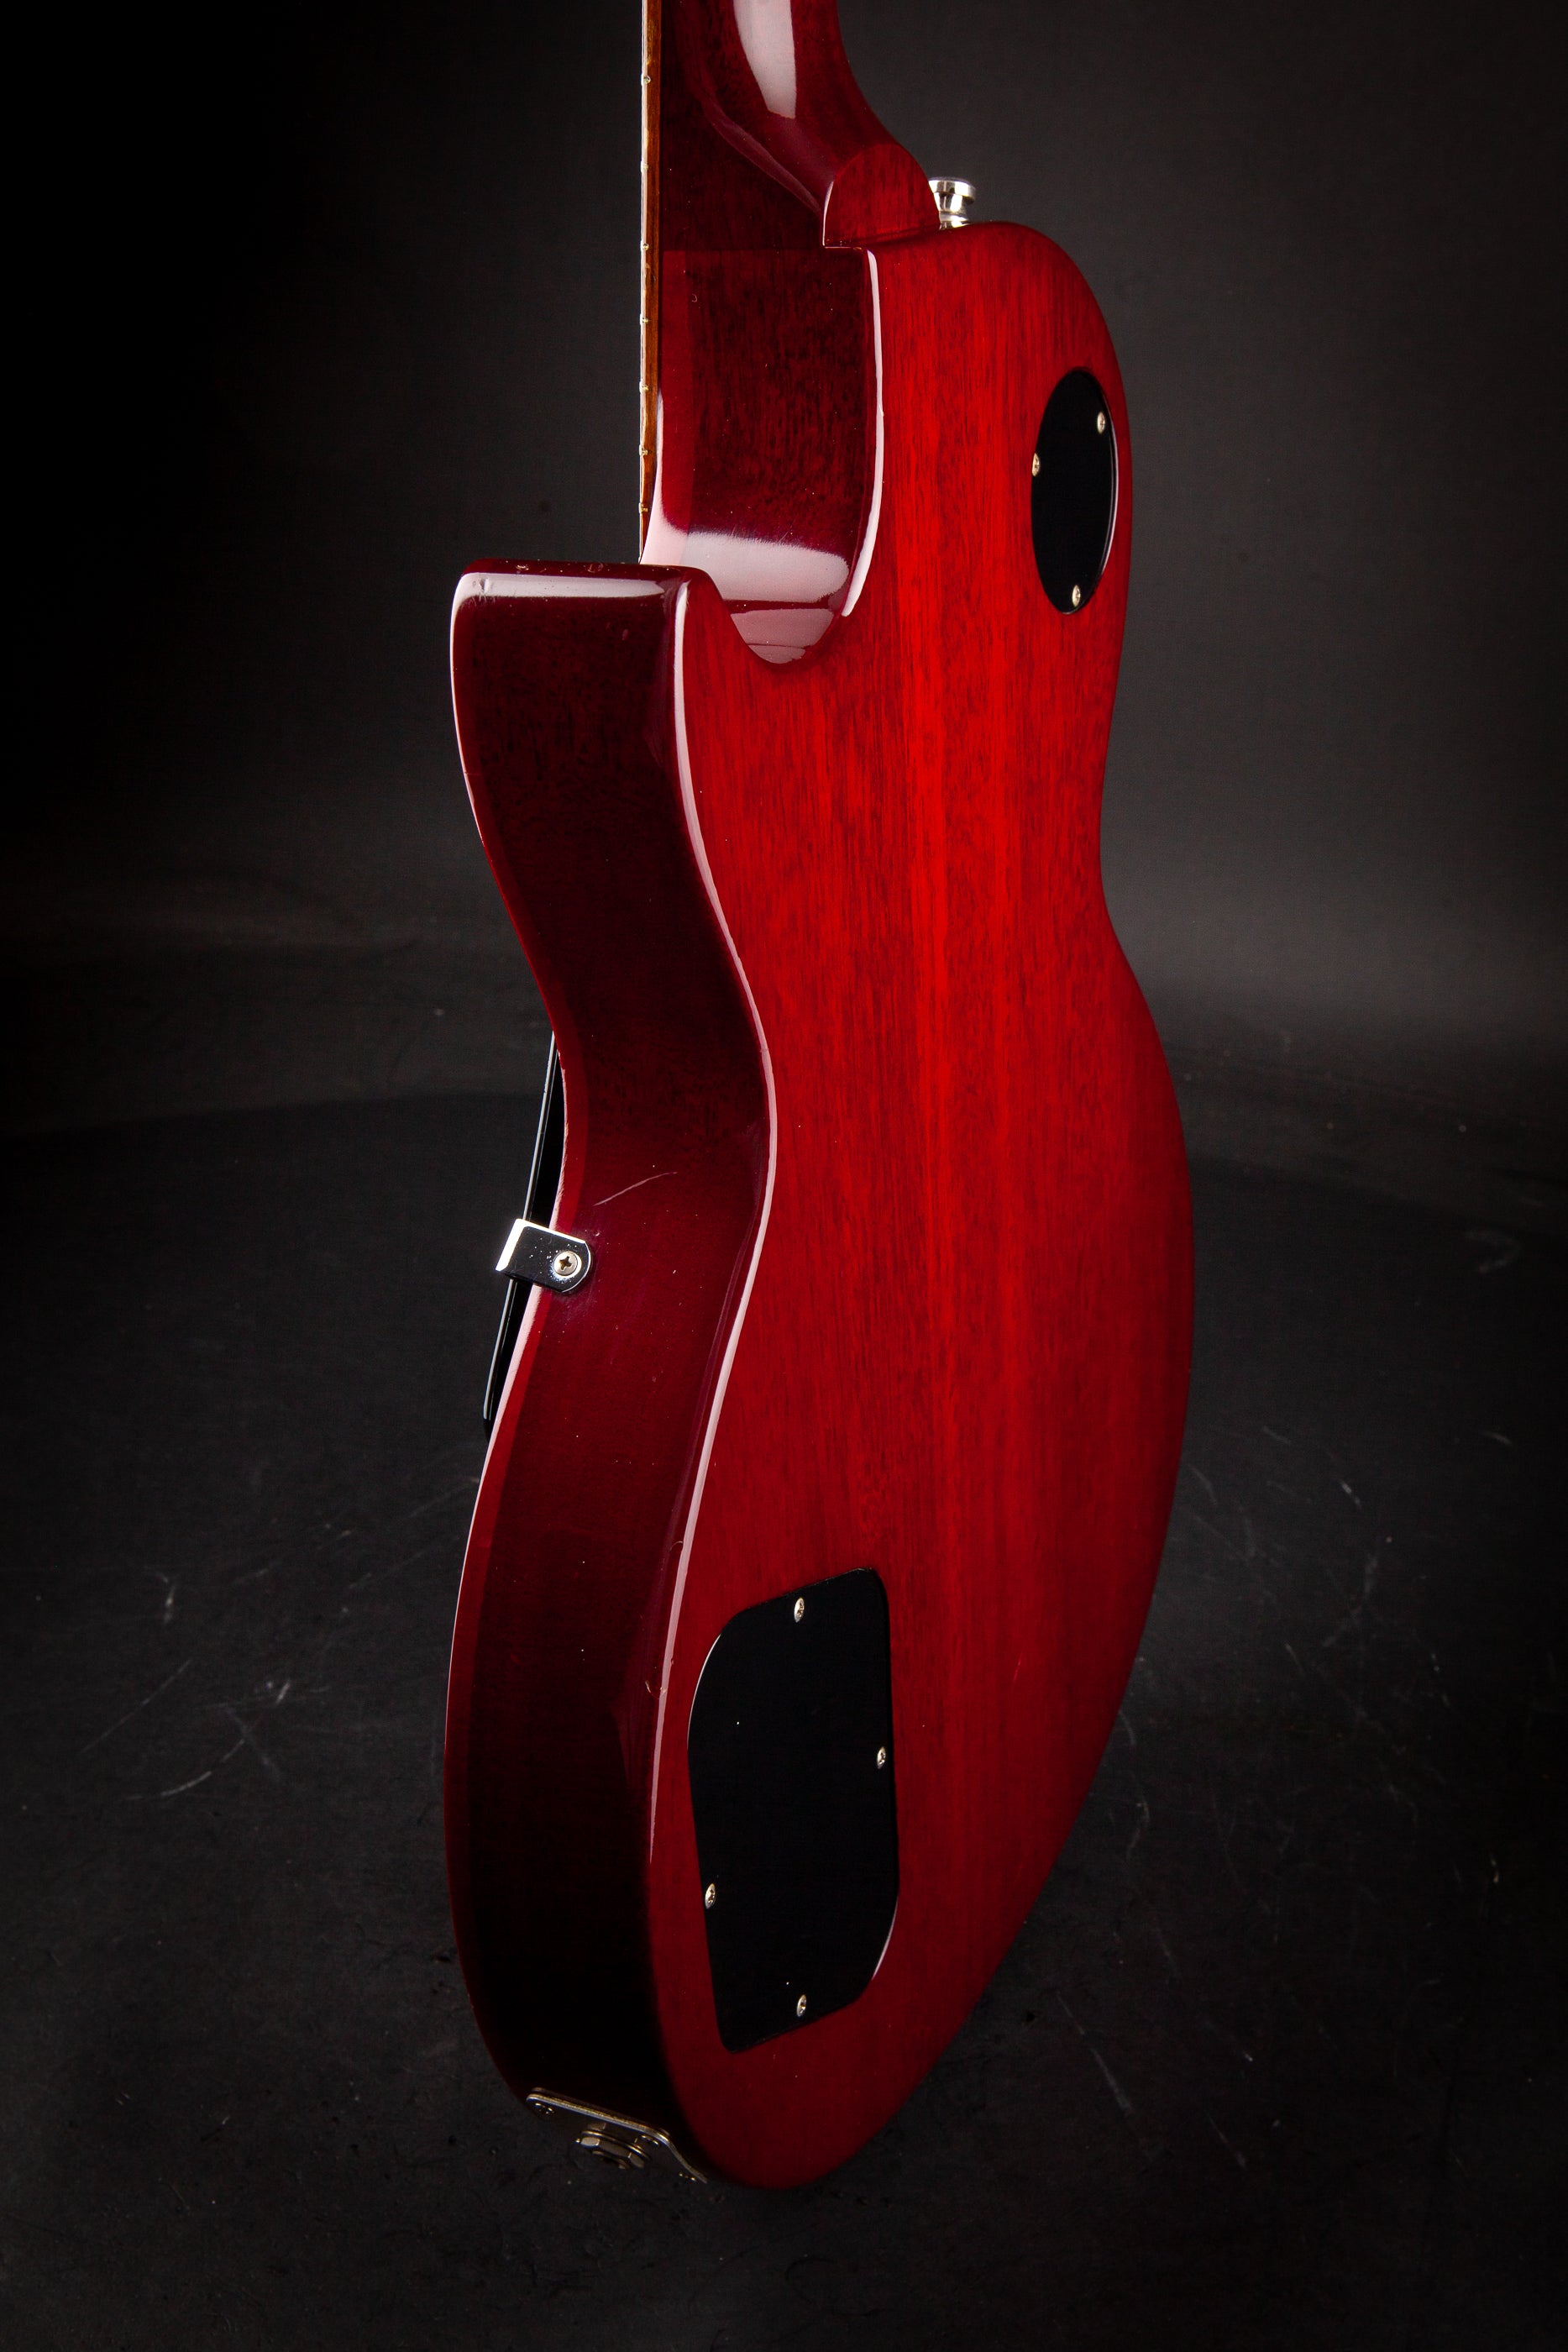 Gibson Guitars: 2002 Les Paul Studio Wine Red #03382602